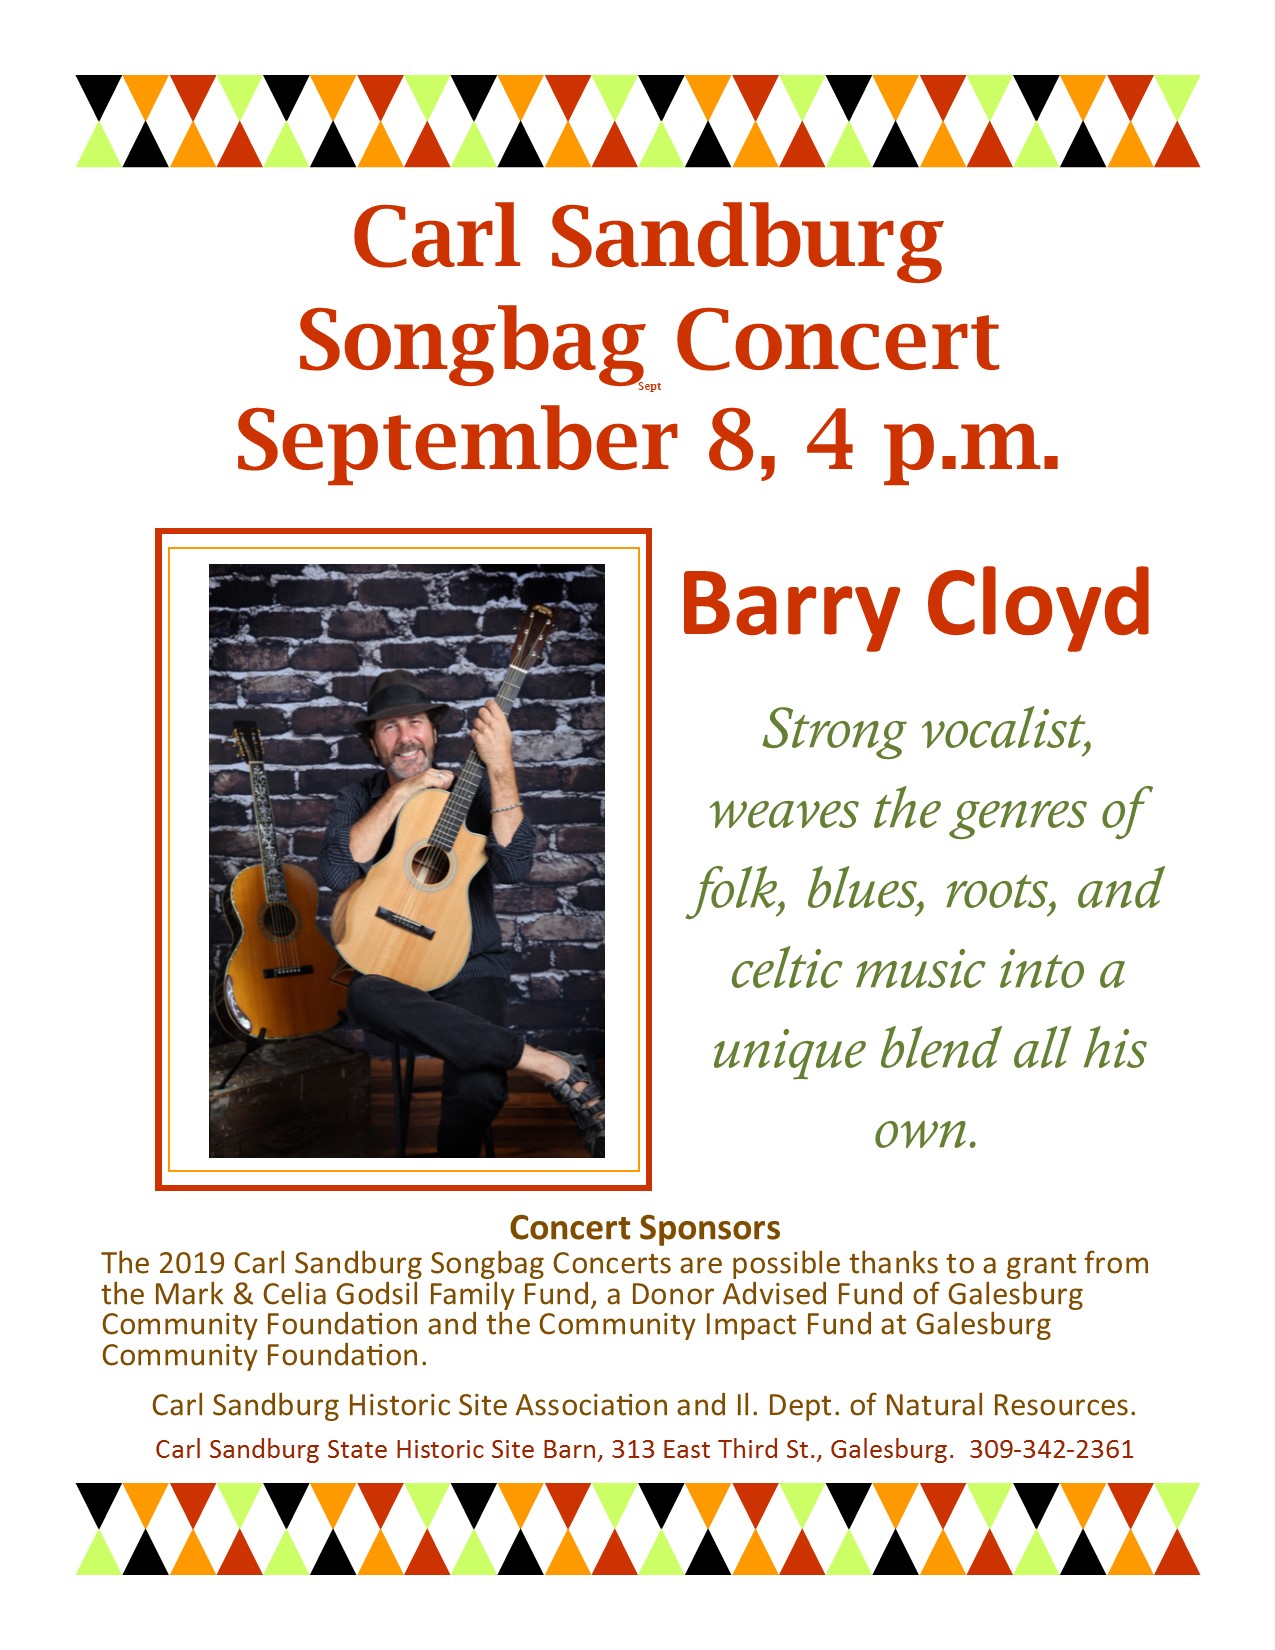 Barry Cloyd, Sandburg Songbag Concert, Sunday, September 8, 2019, 4:00 pm